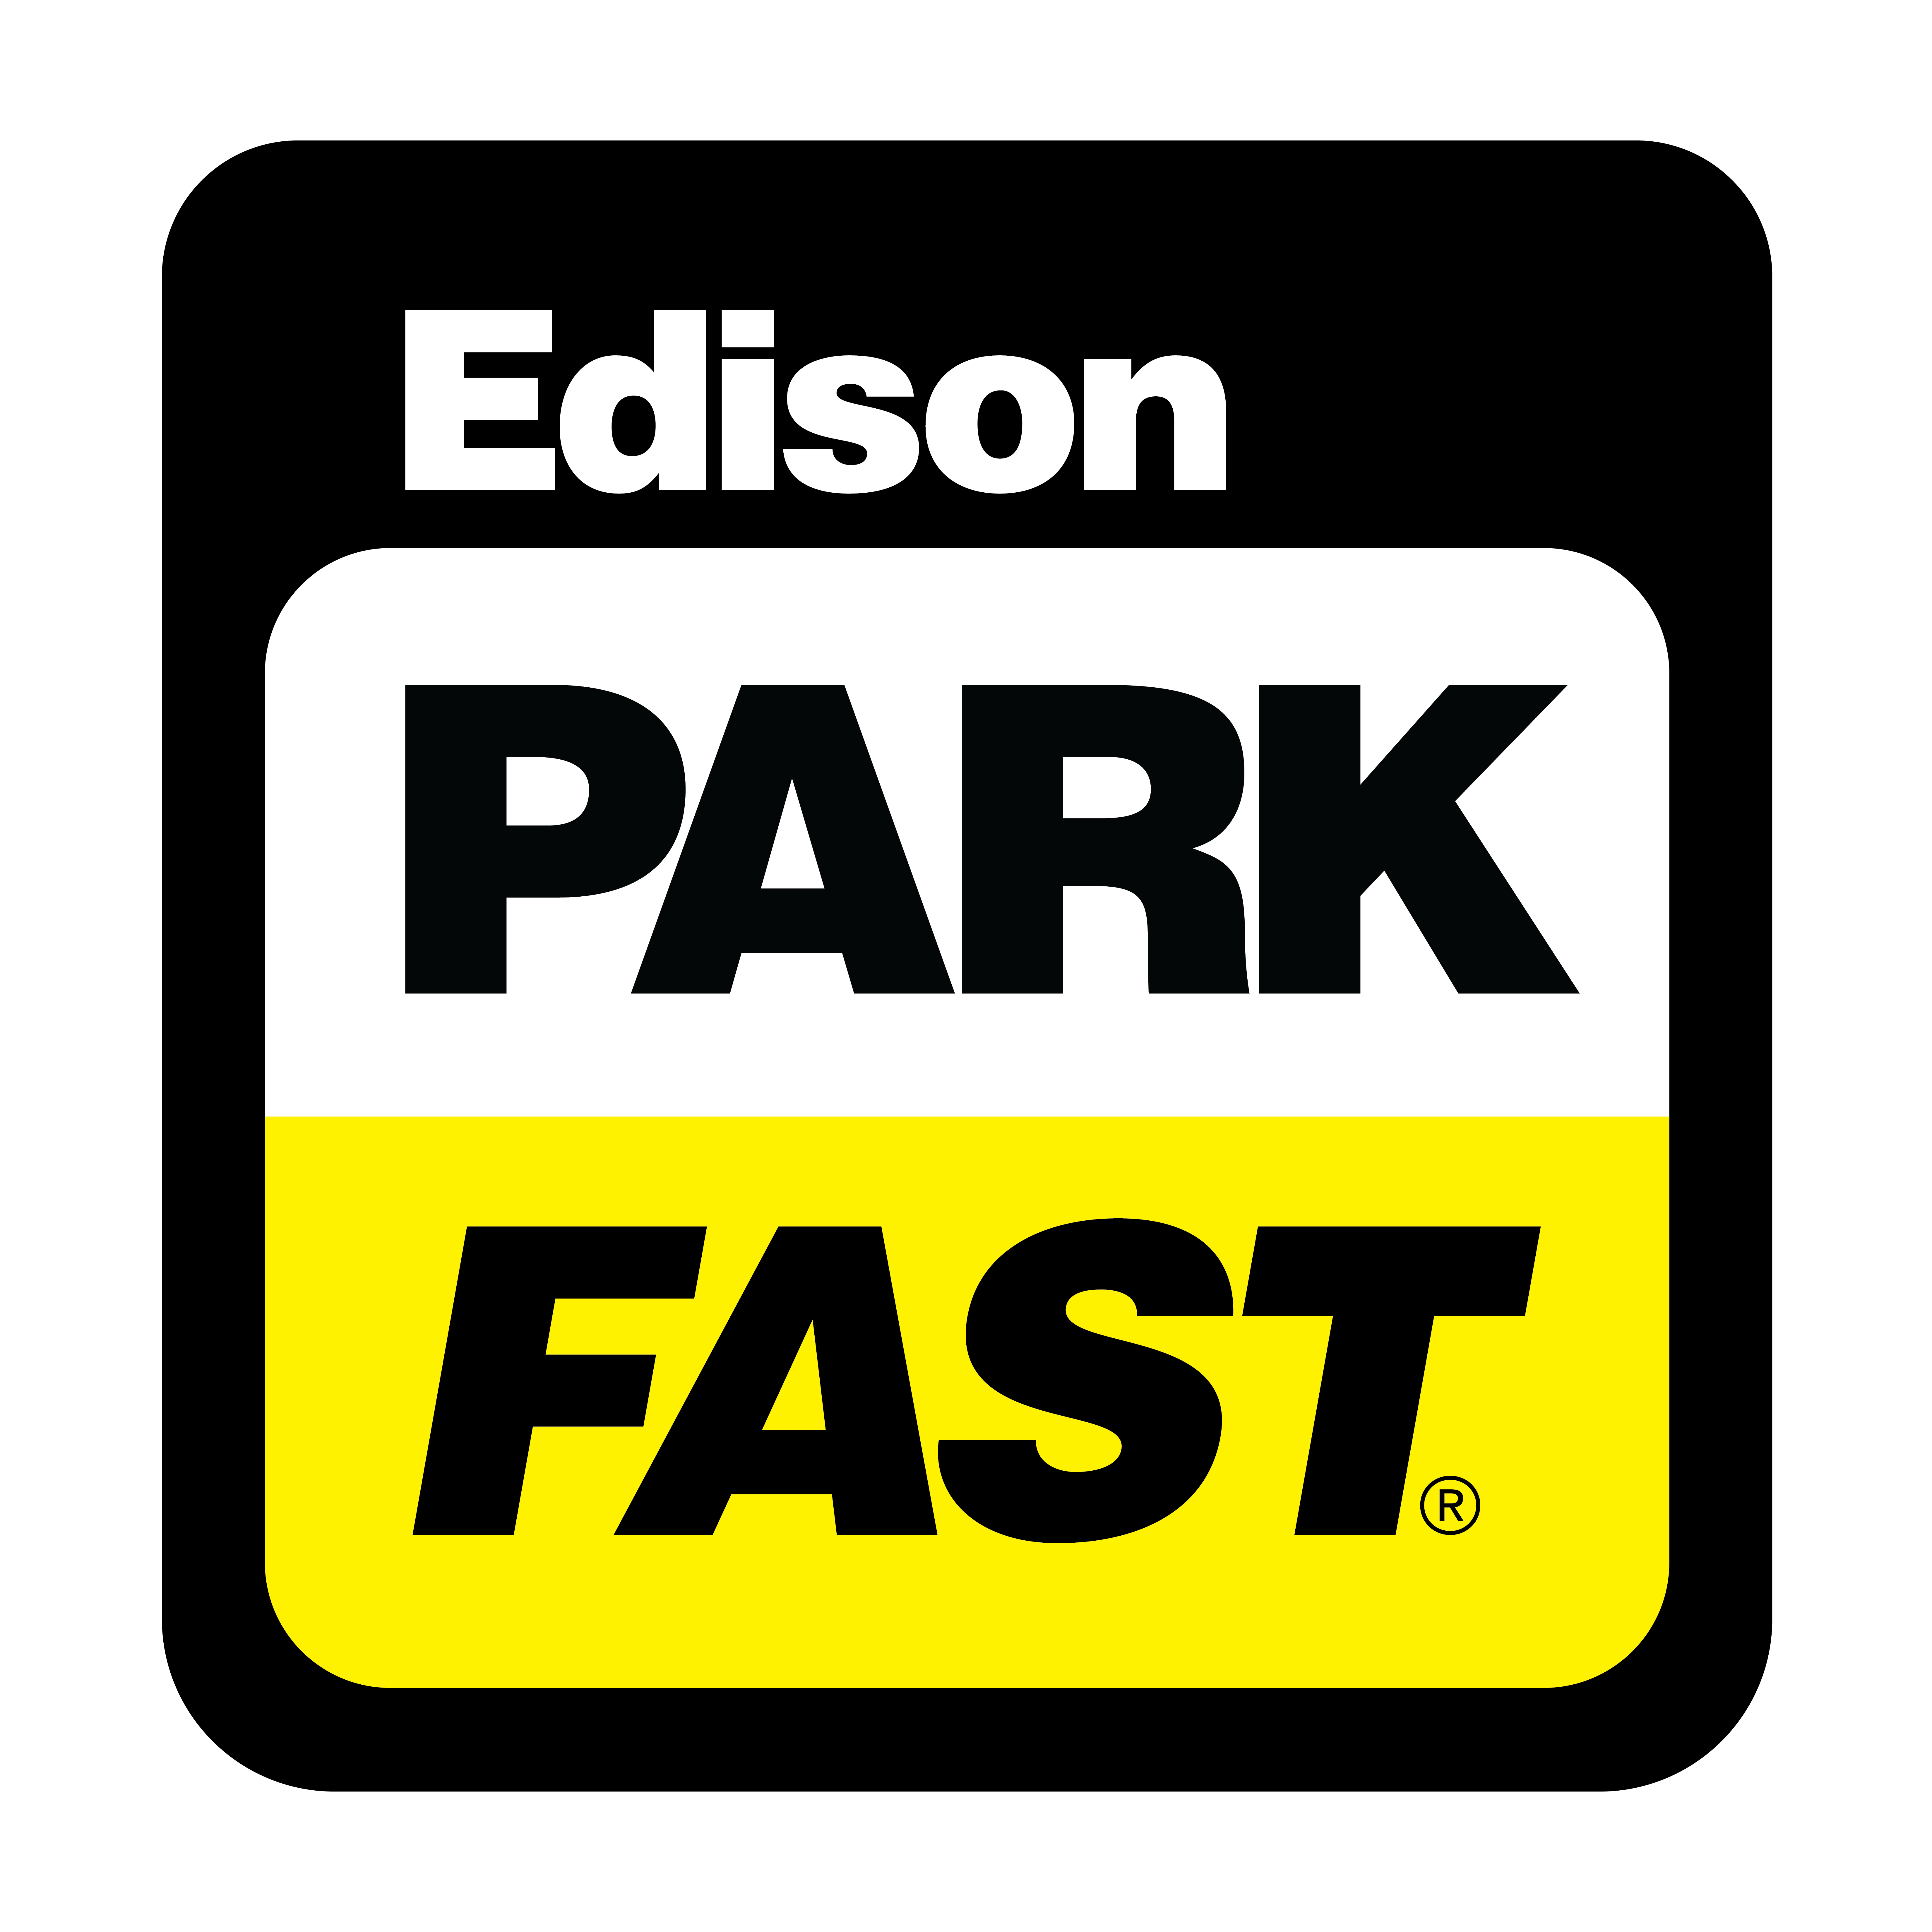 Edison ParkFast - New York, NY 10011 - (888)727-5327 | ShowMeLocal.com